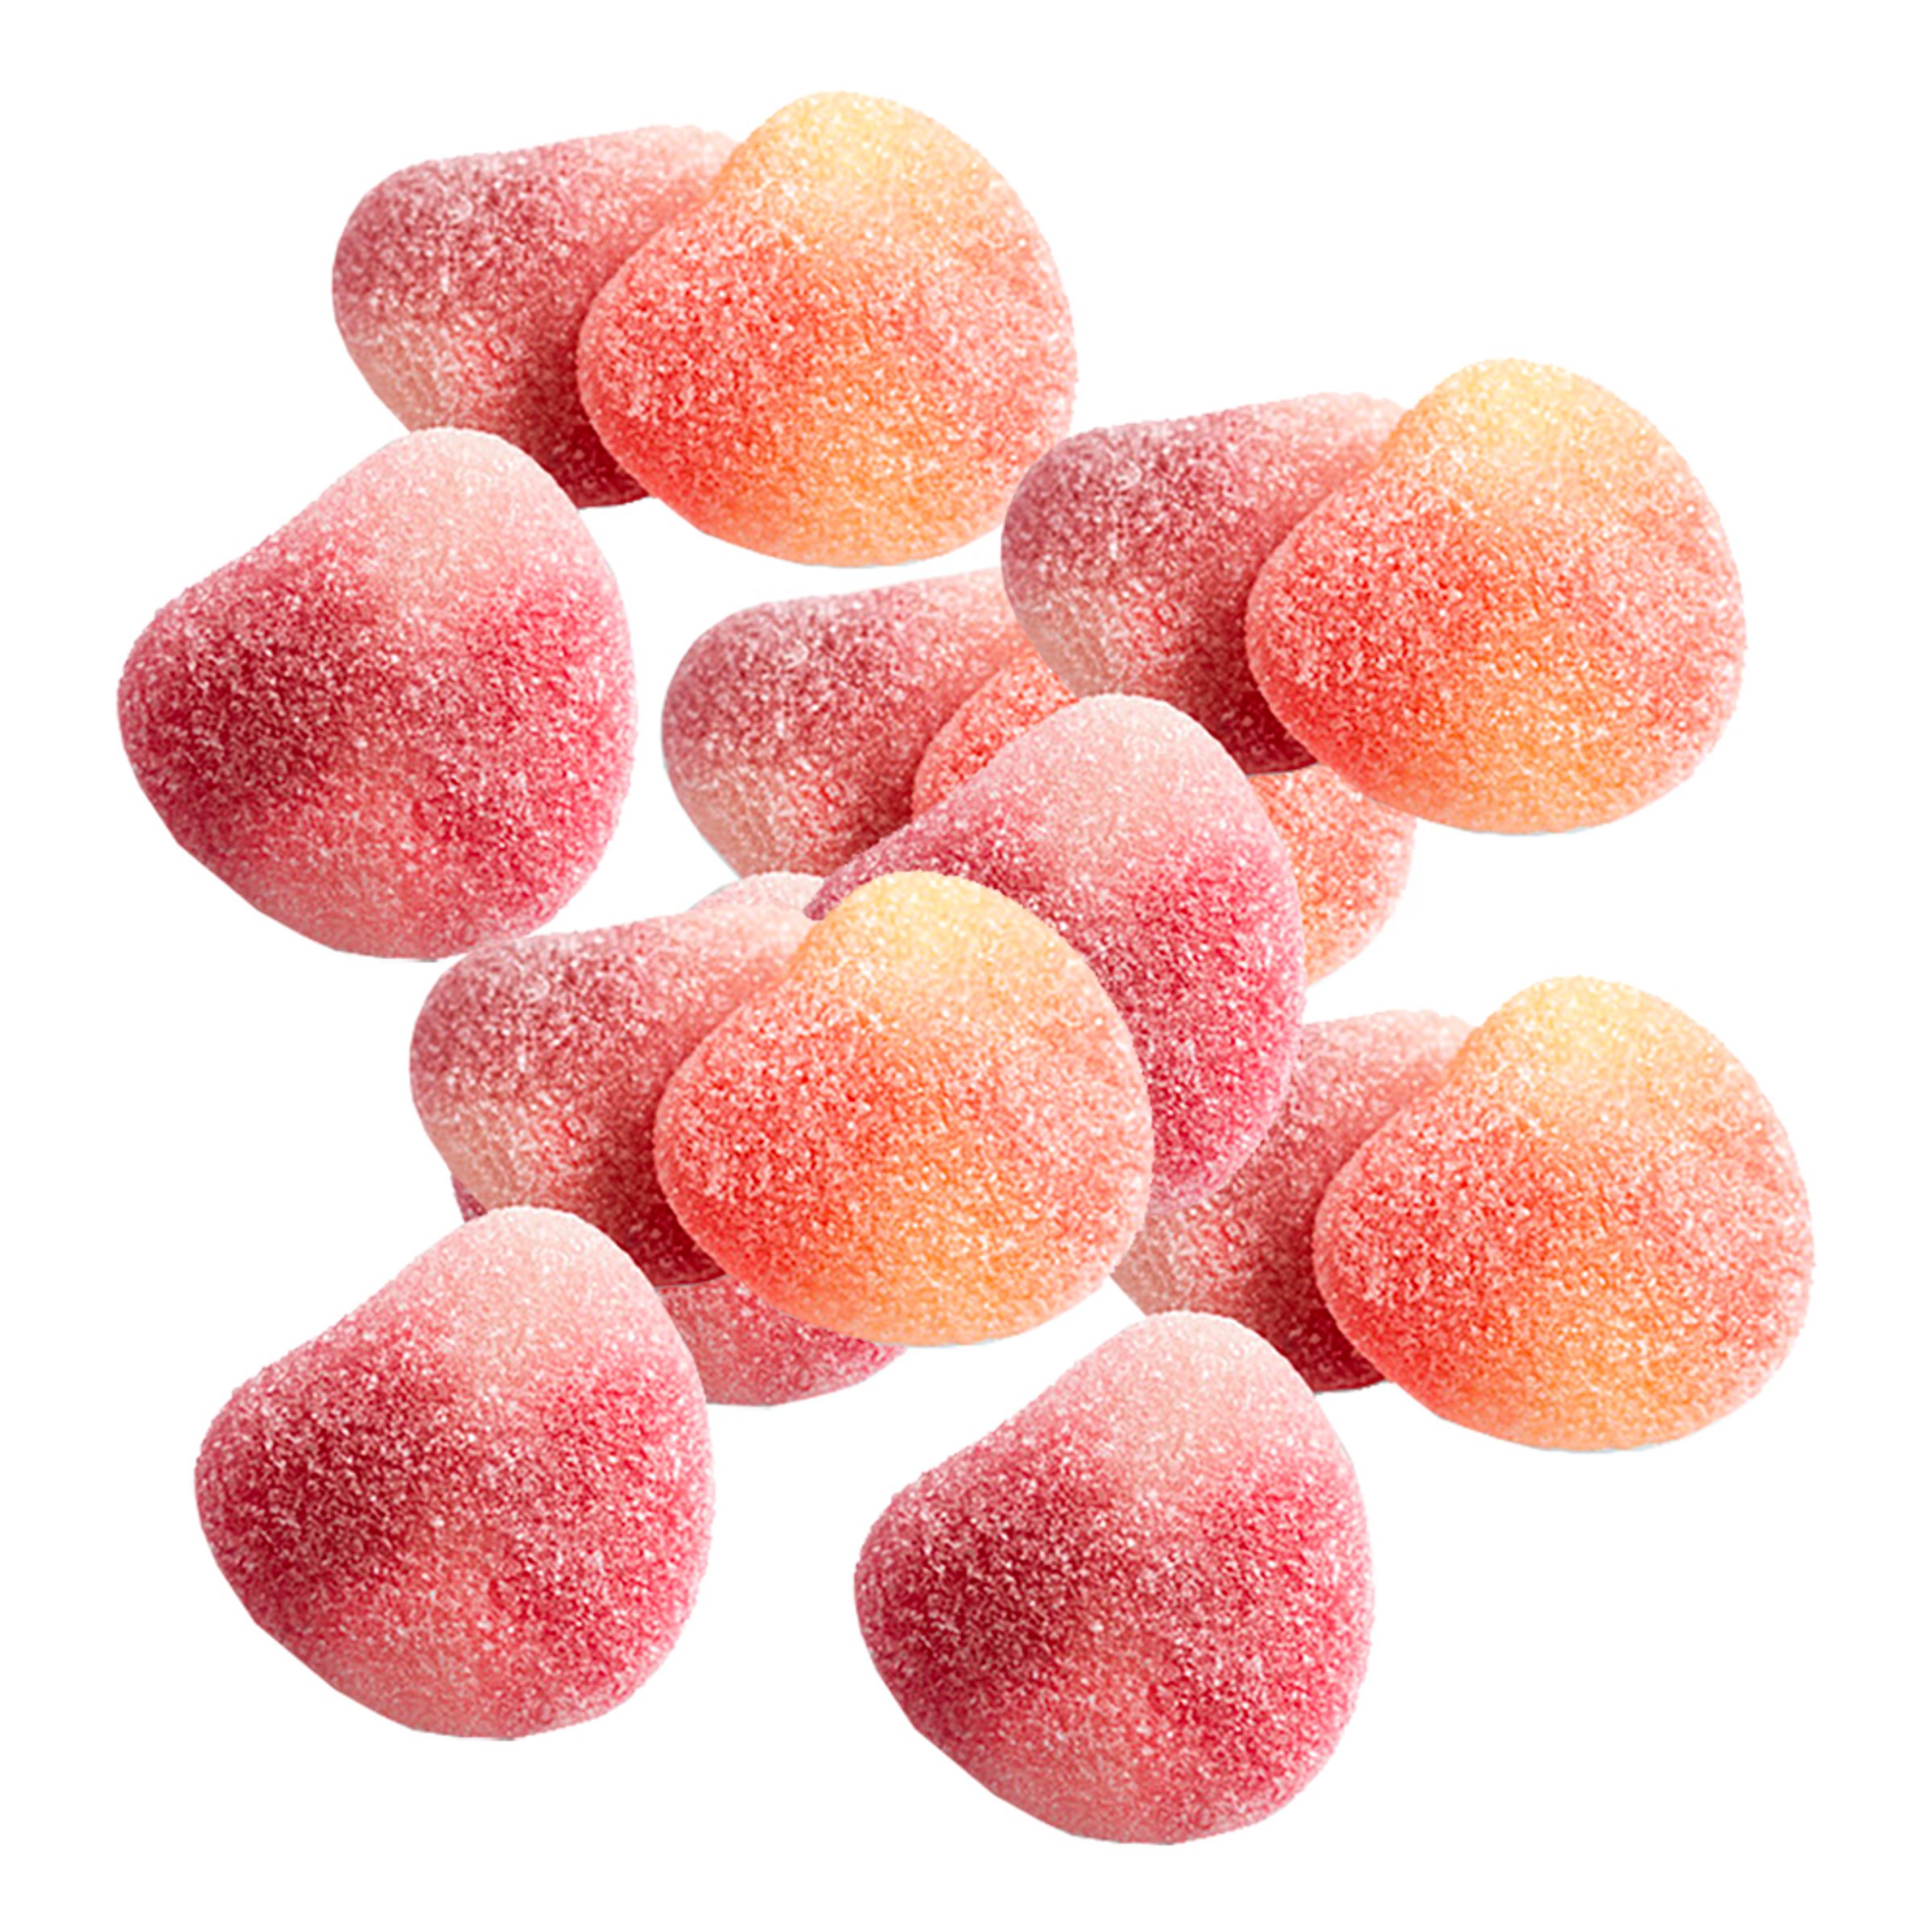 Läs mer om Persikor/Peaches i Storpack - 2,4 kg